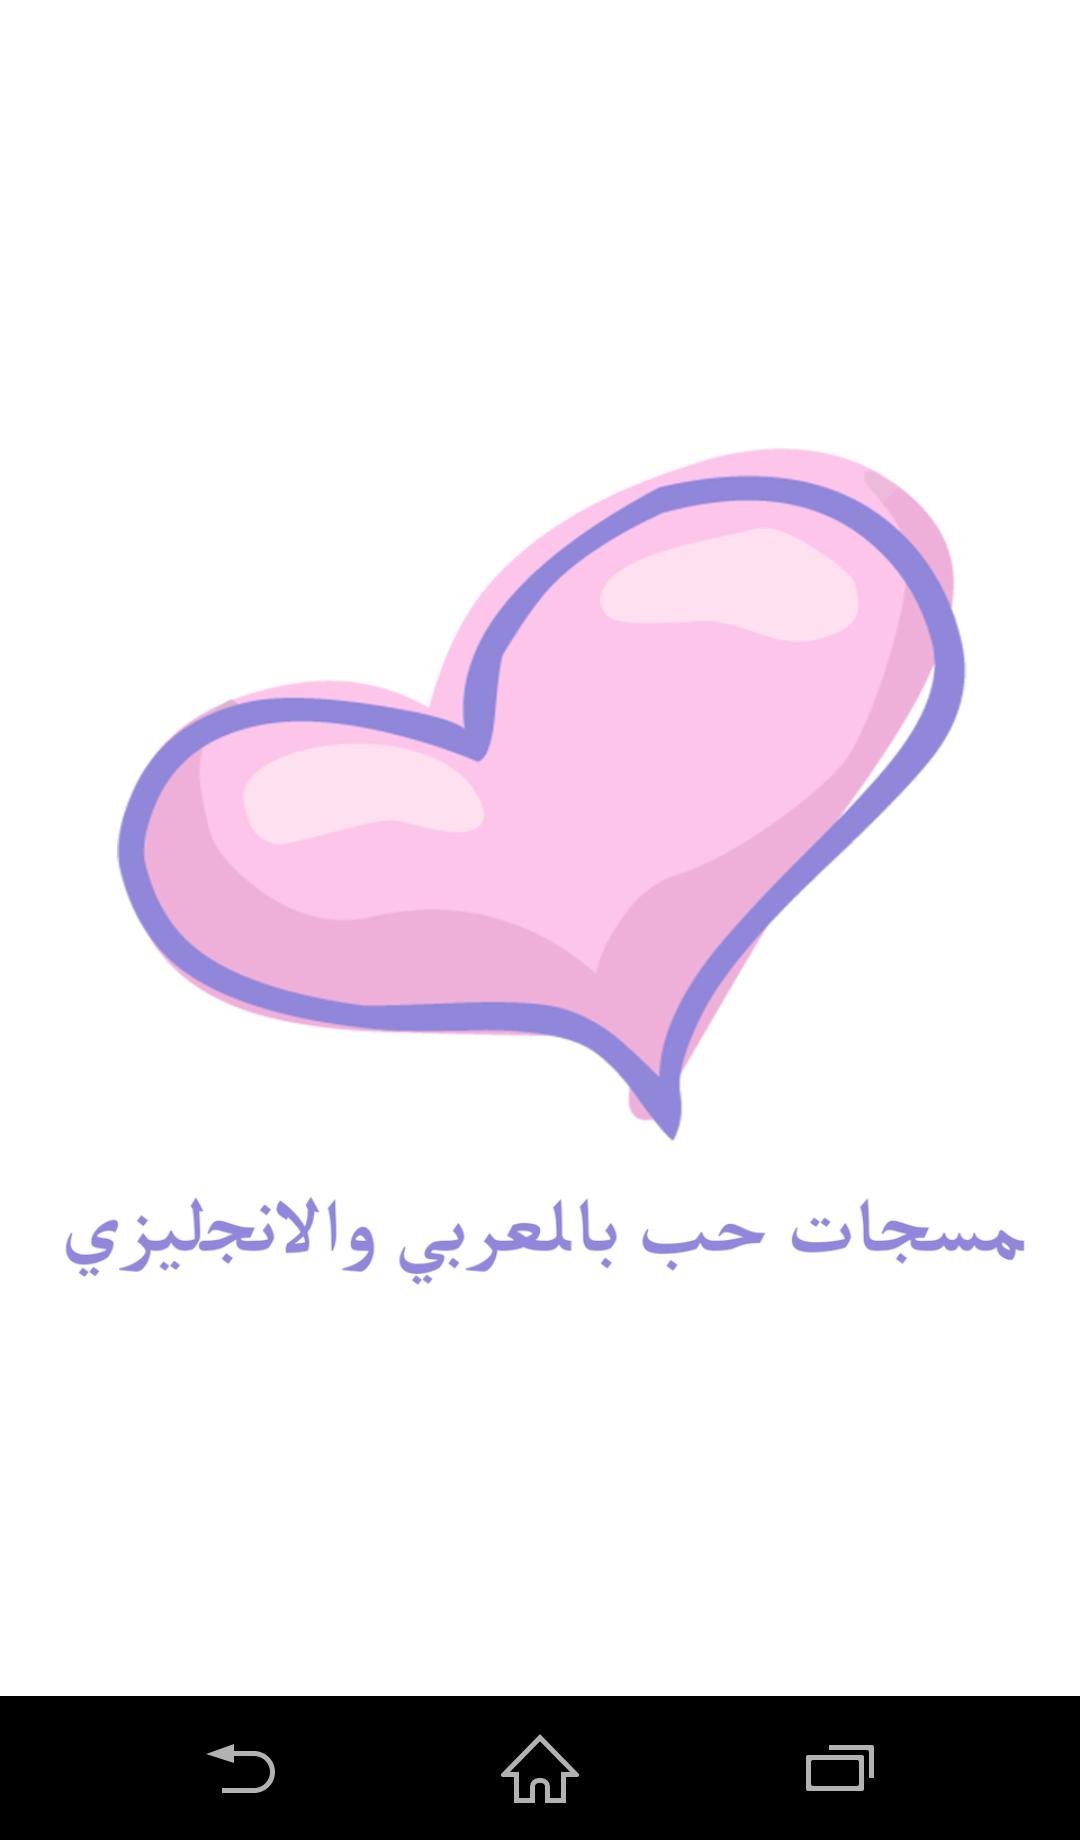 مسجات حب بالعربي والانجليزي For Android Apk Download